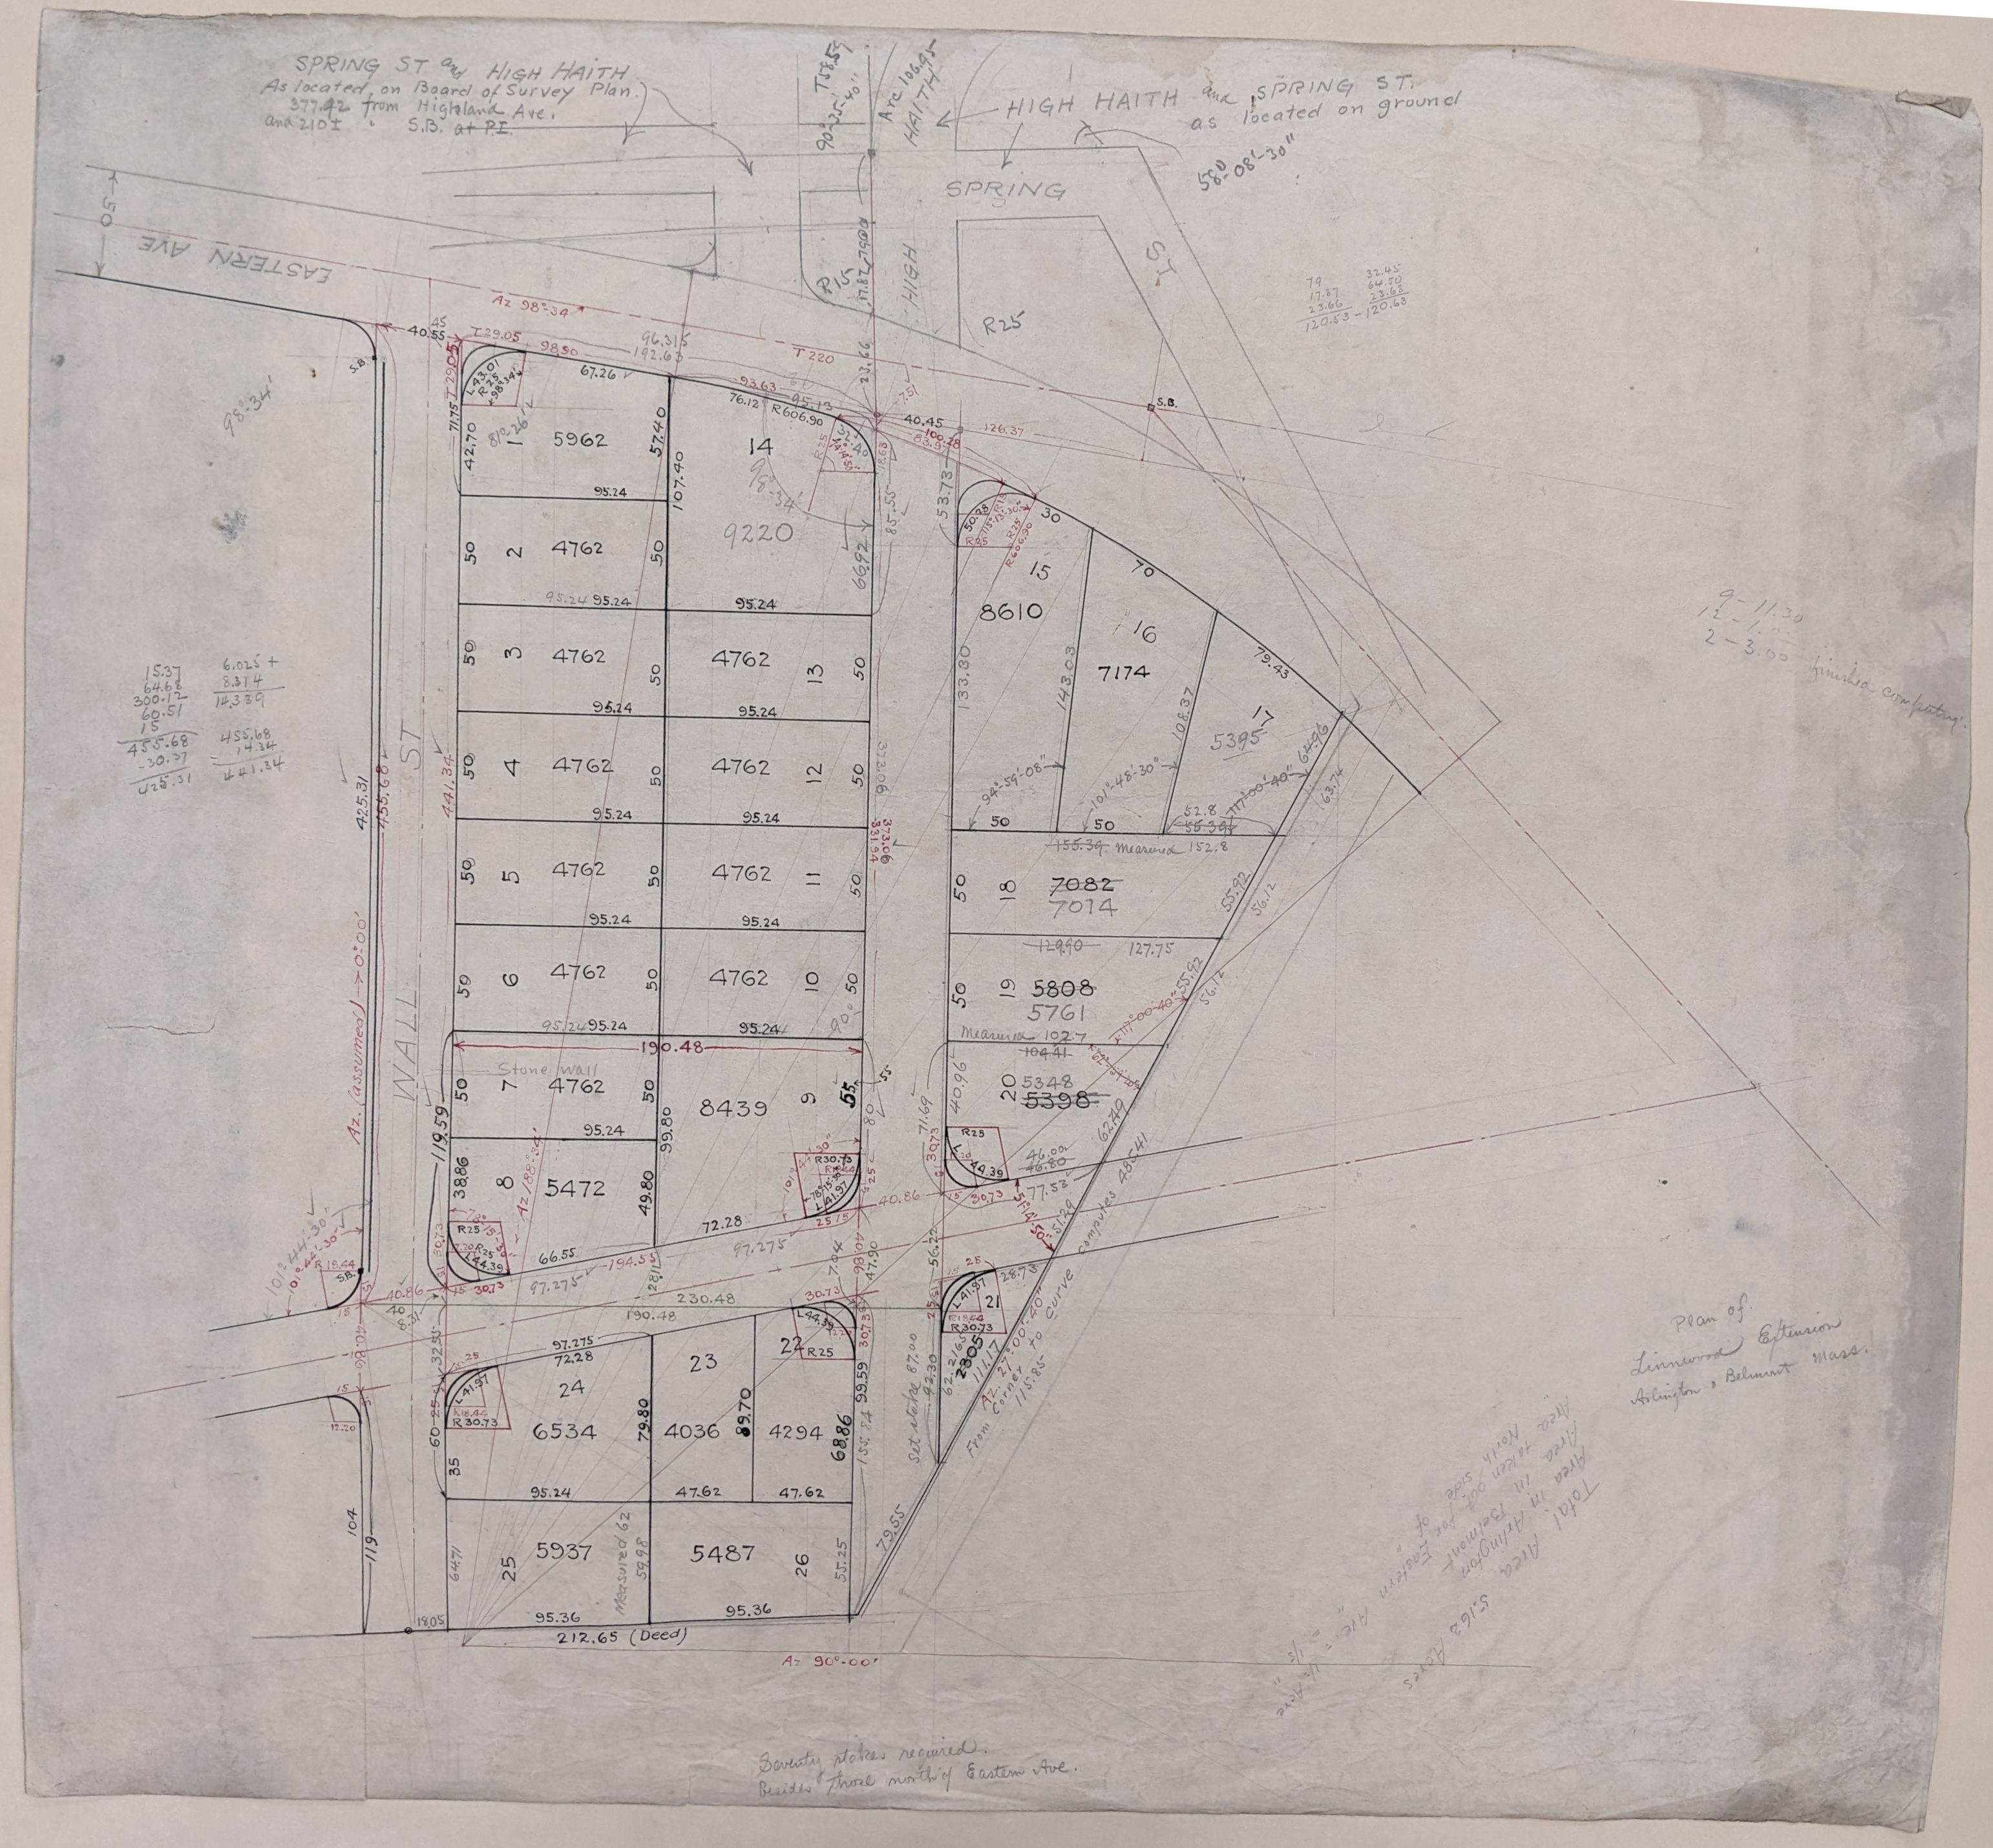 Manuscript property survey from the Robert Bayard Bellamy Surveying Papers